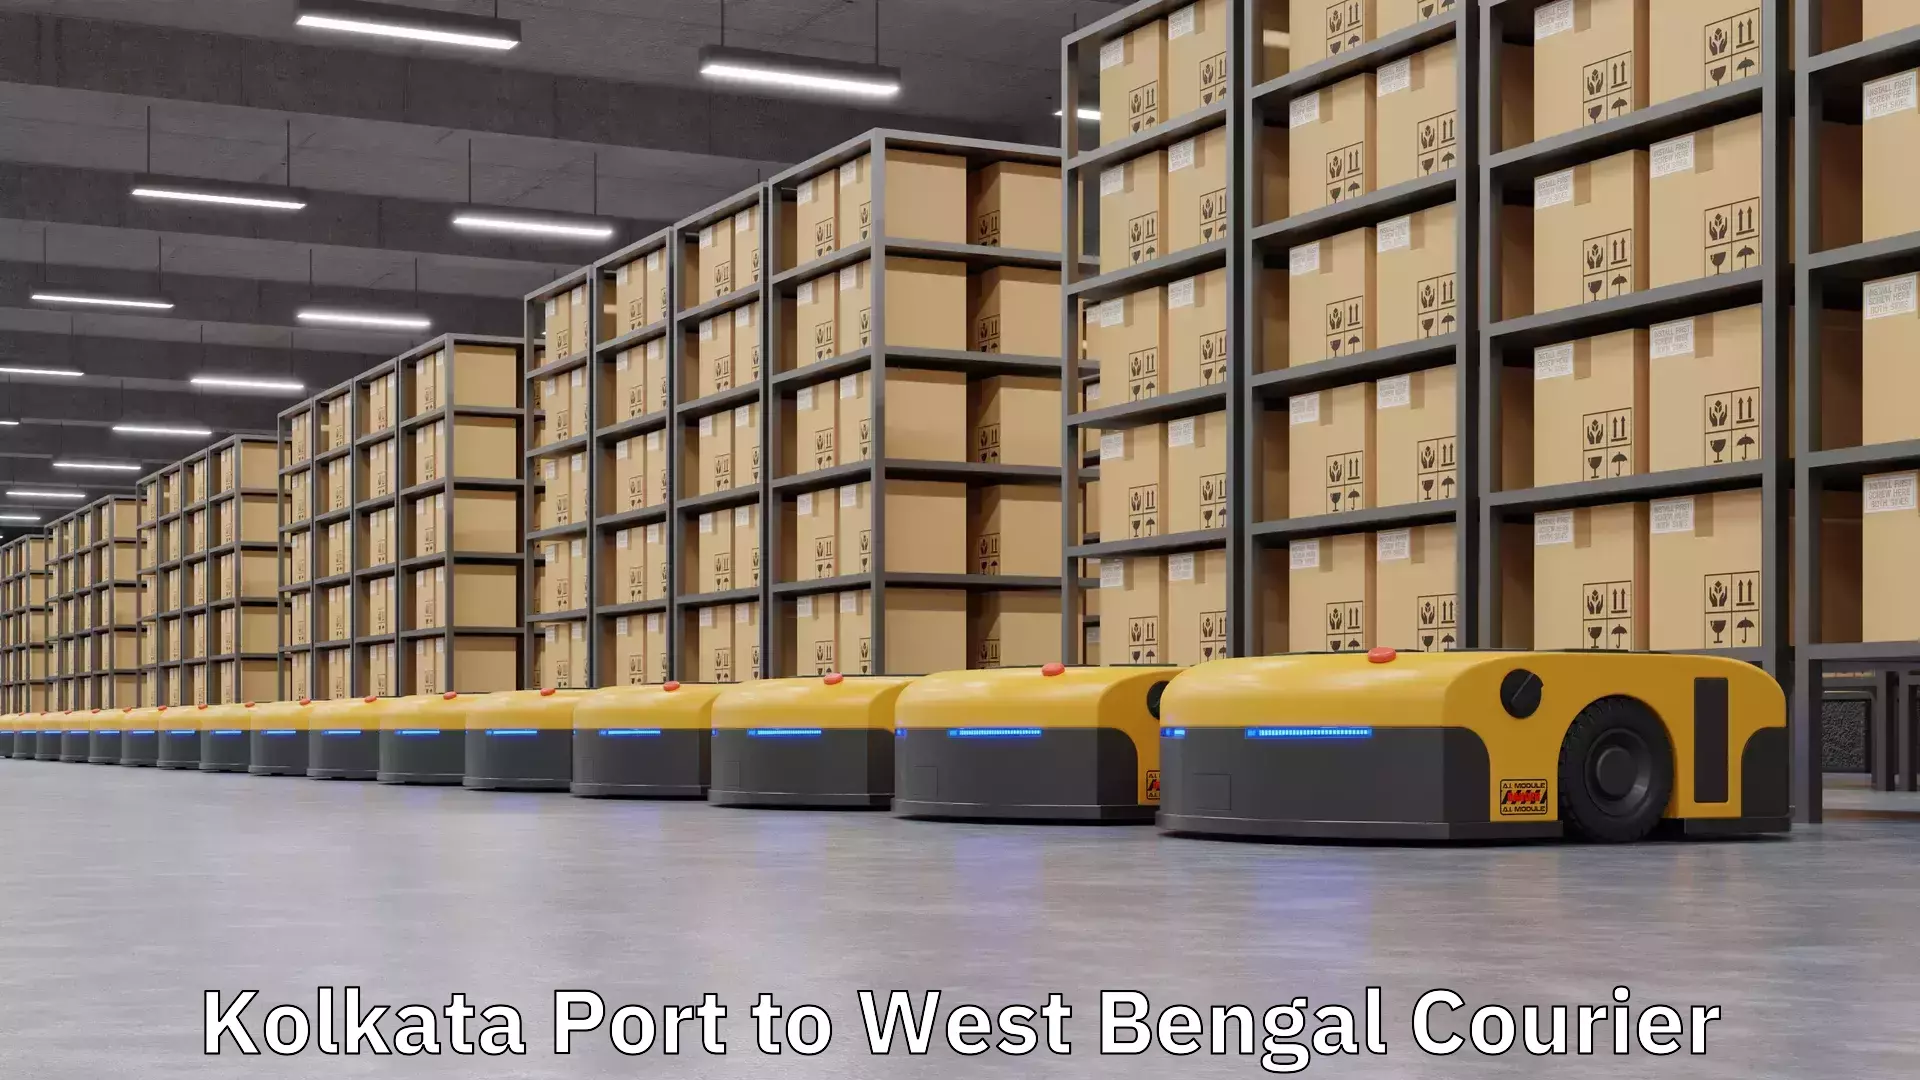 Express delivery capabilities Kolkata Port to Siliguri